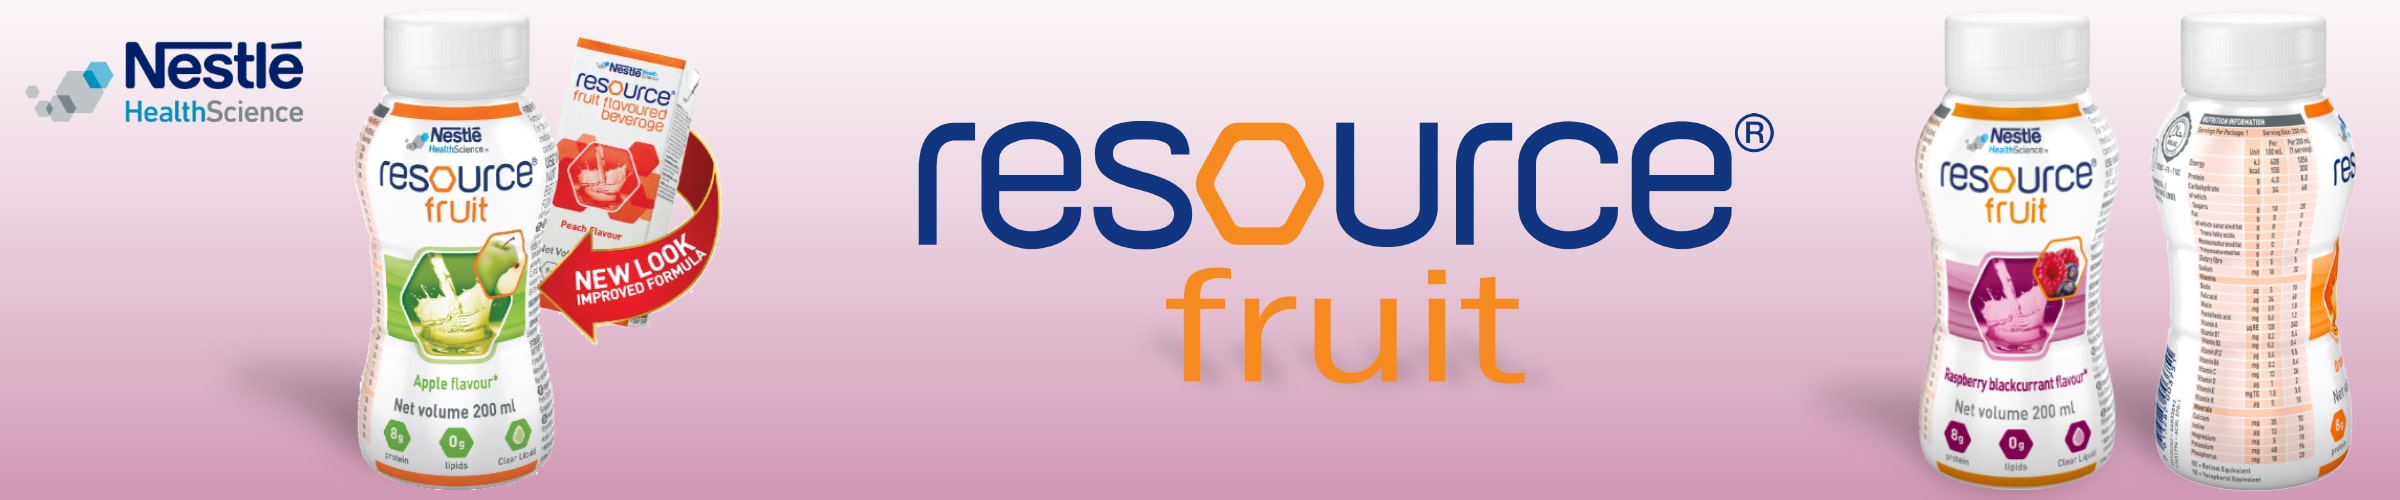 Resource_Fruit_Liquid_Banner-01-min.jpg